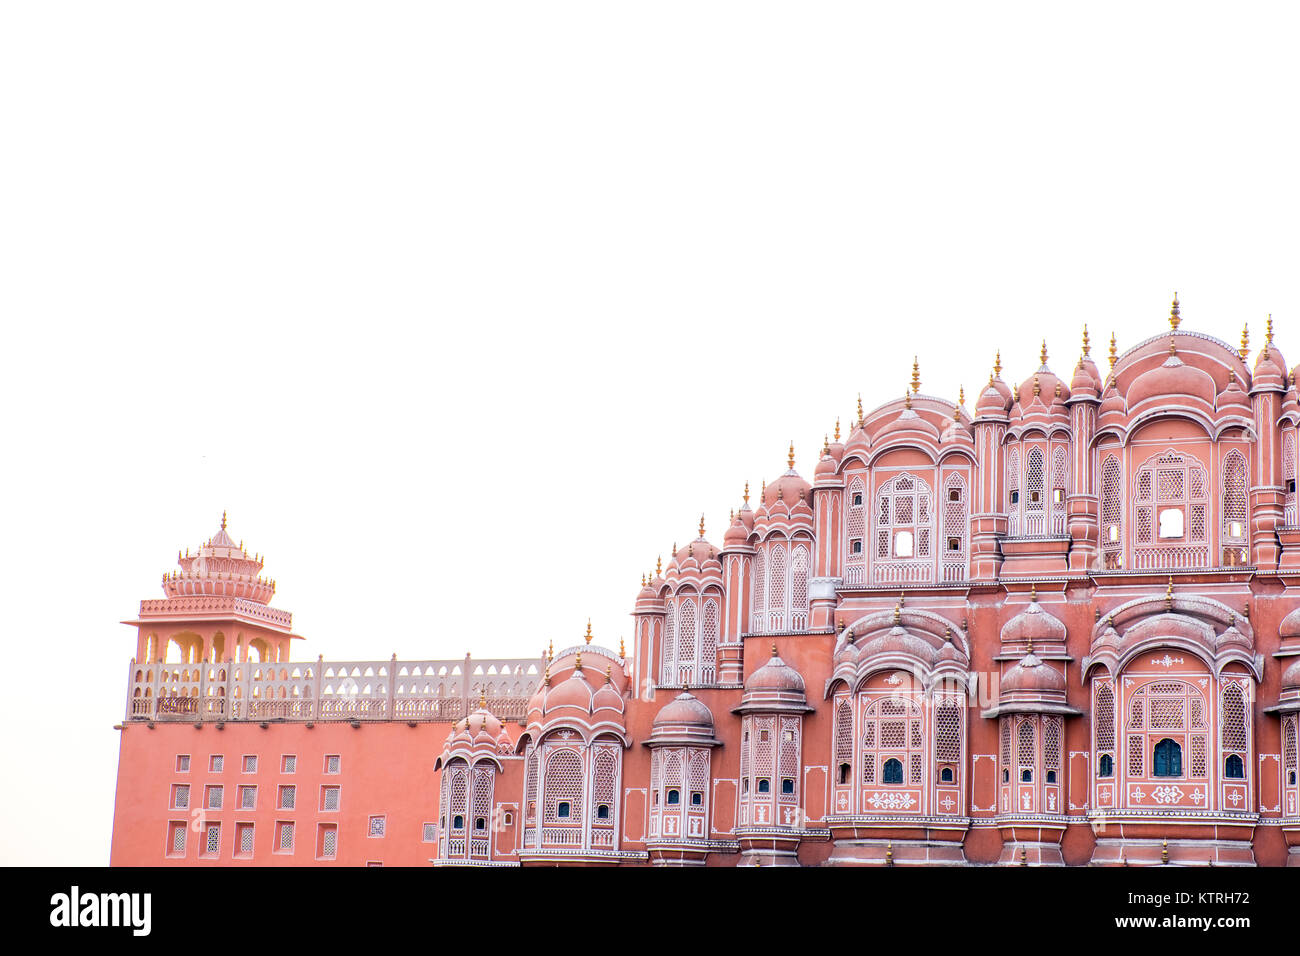 Hawa Mahal, Palast der Winde, Palast der Brise in der Pink City, Jaipur, Rajasthan, Indien Stockfoto